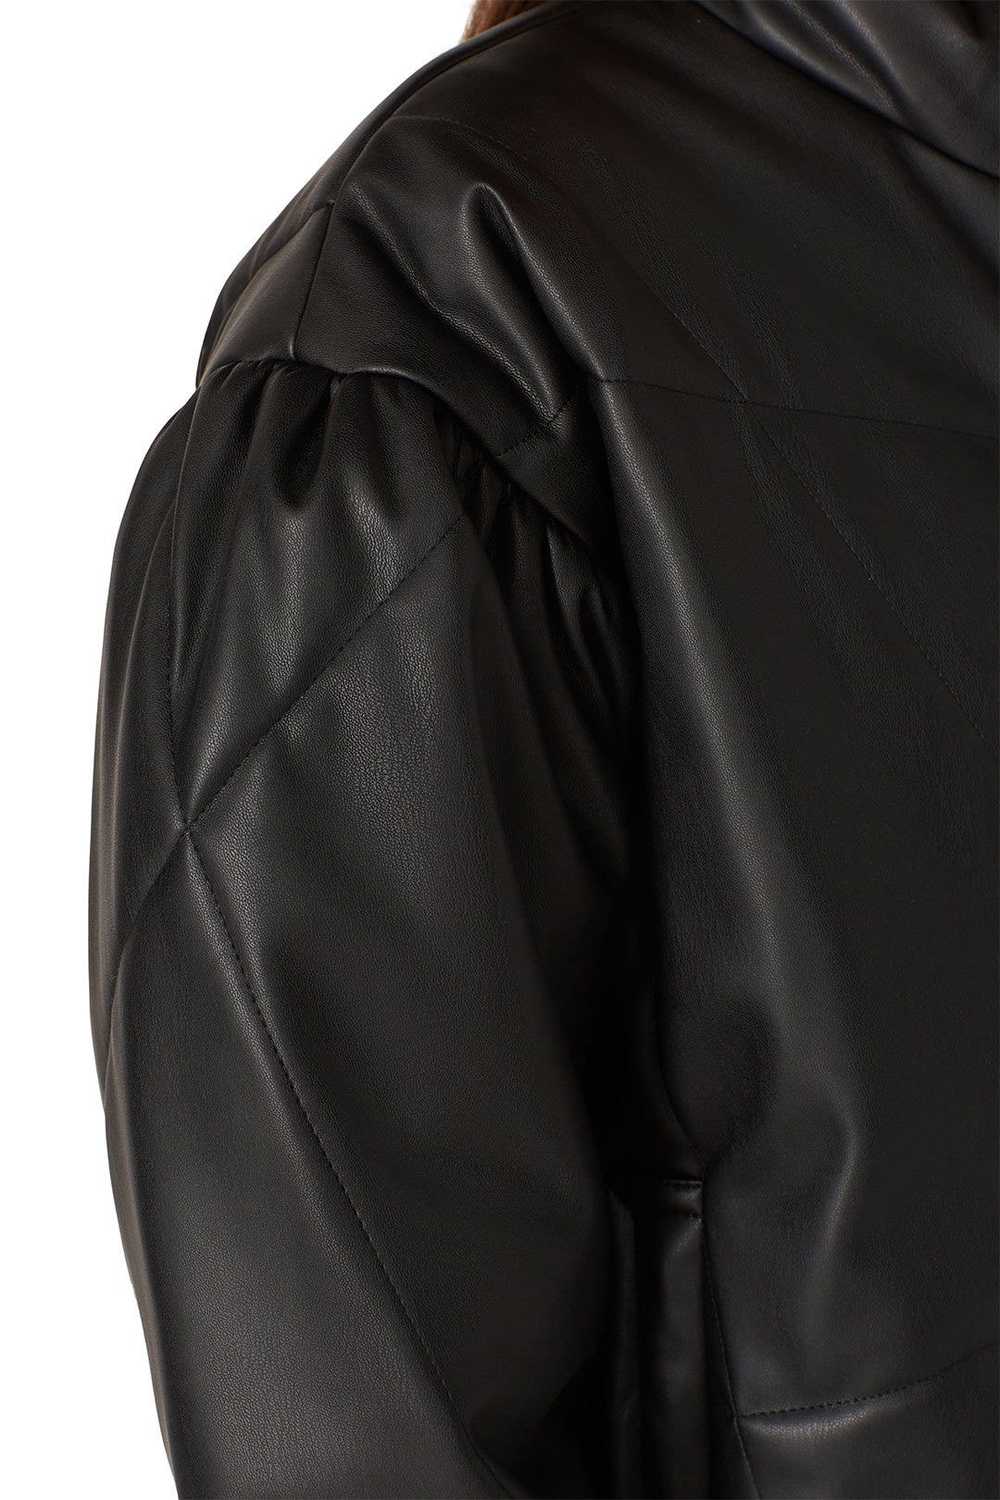 Sea New York Black Faux Leather Puff Jacket - image 5